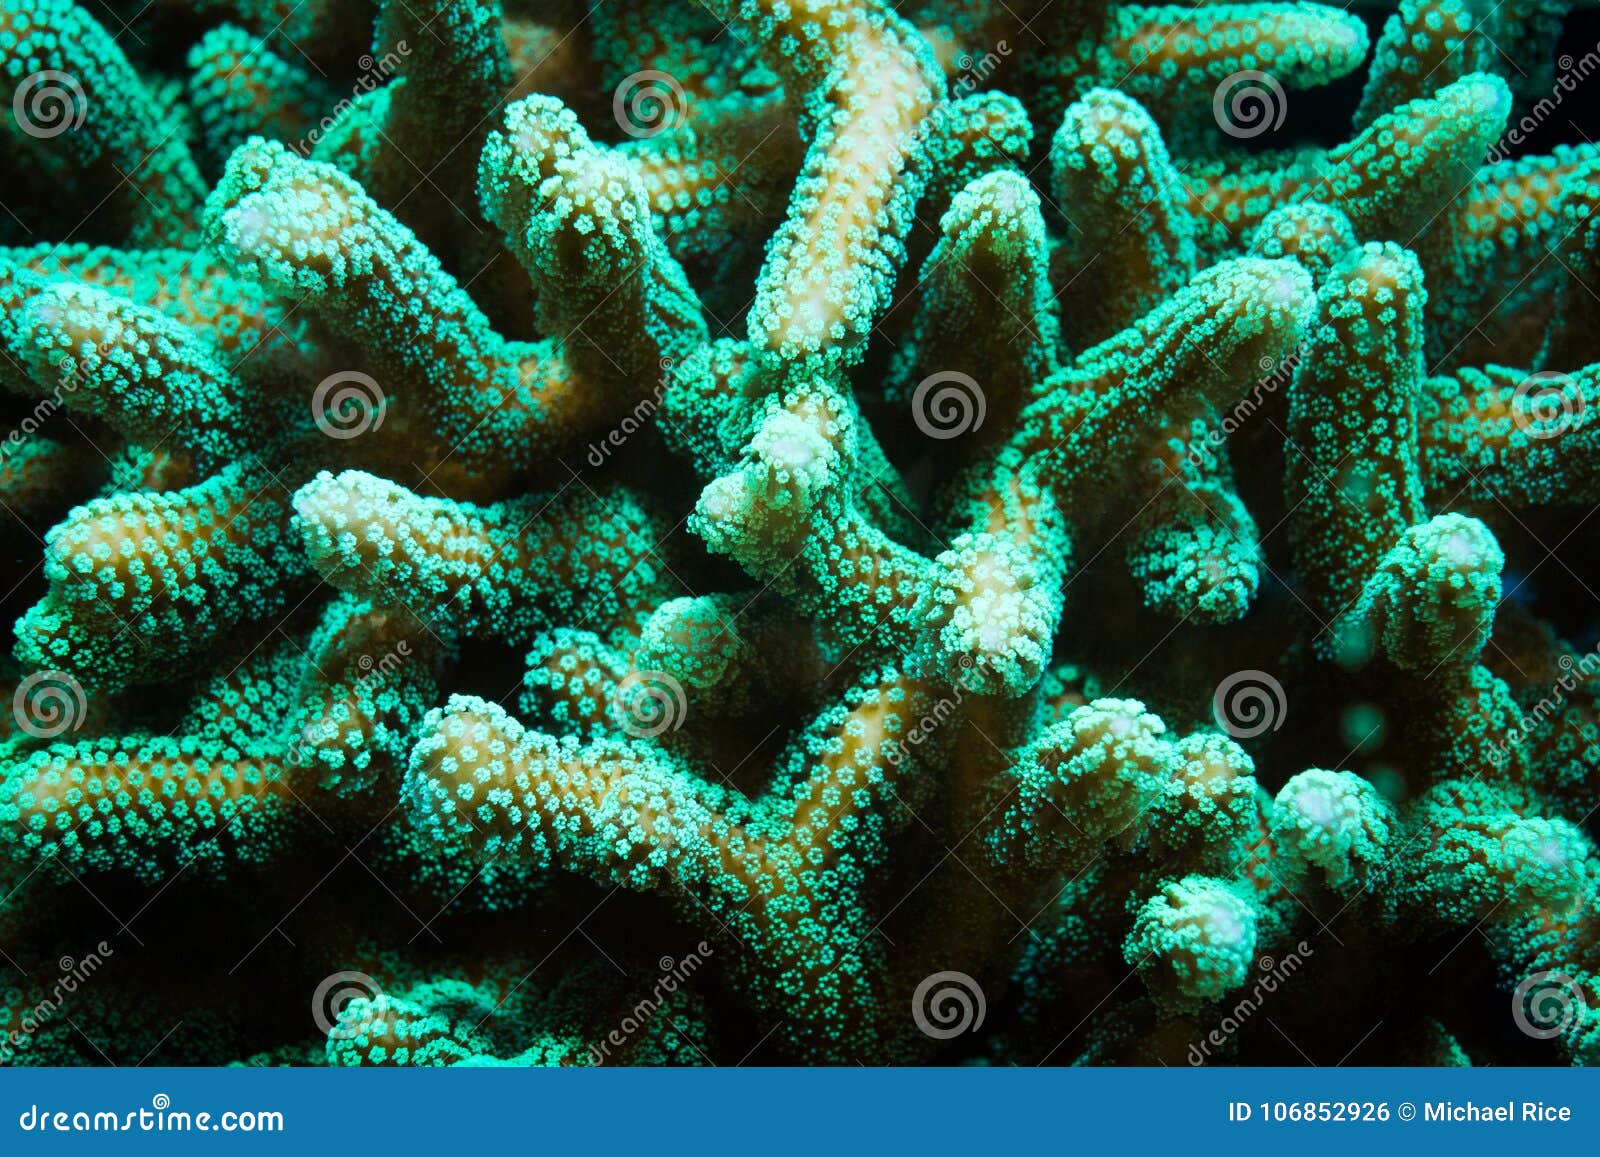 green stylophora branching hard coral